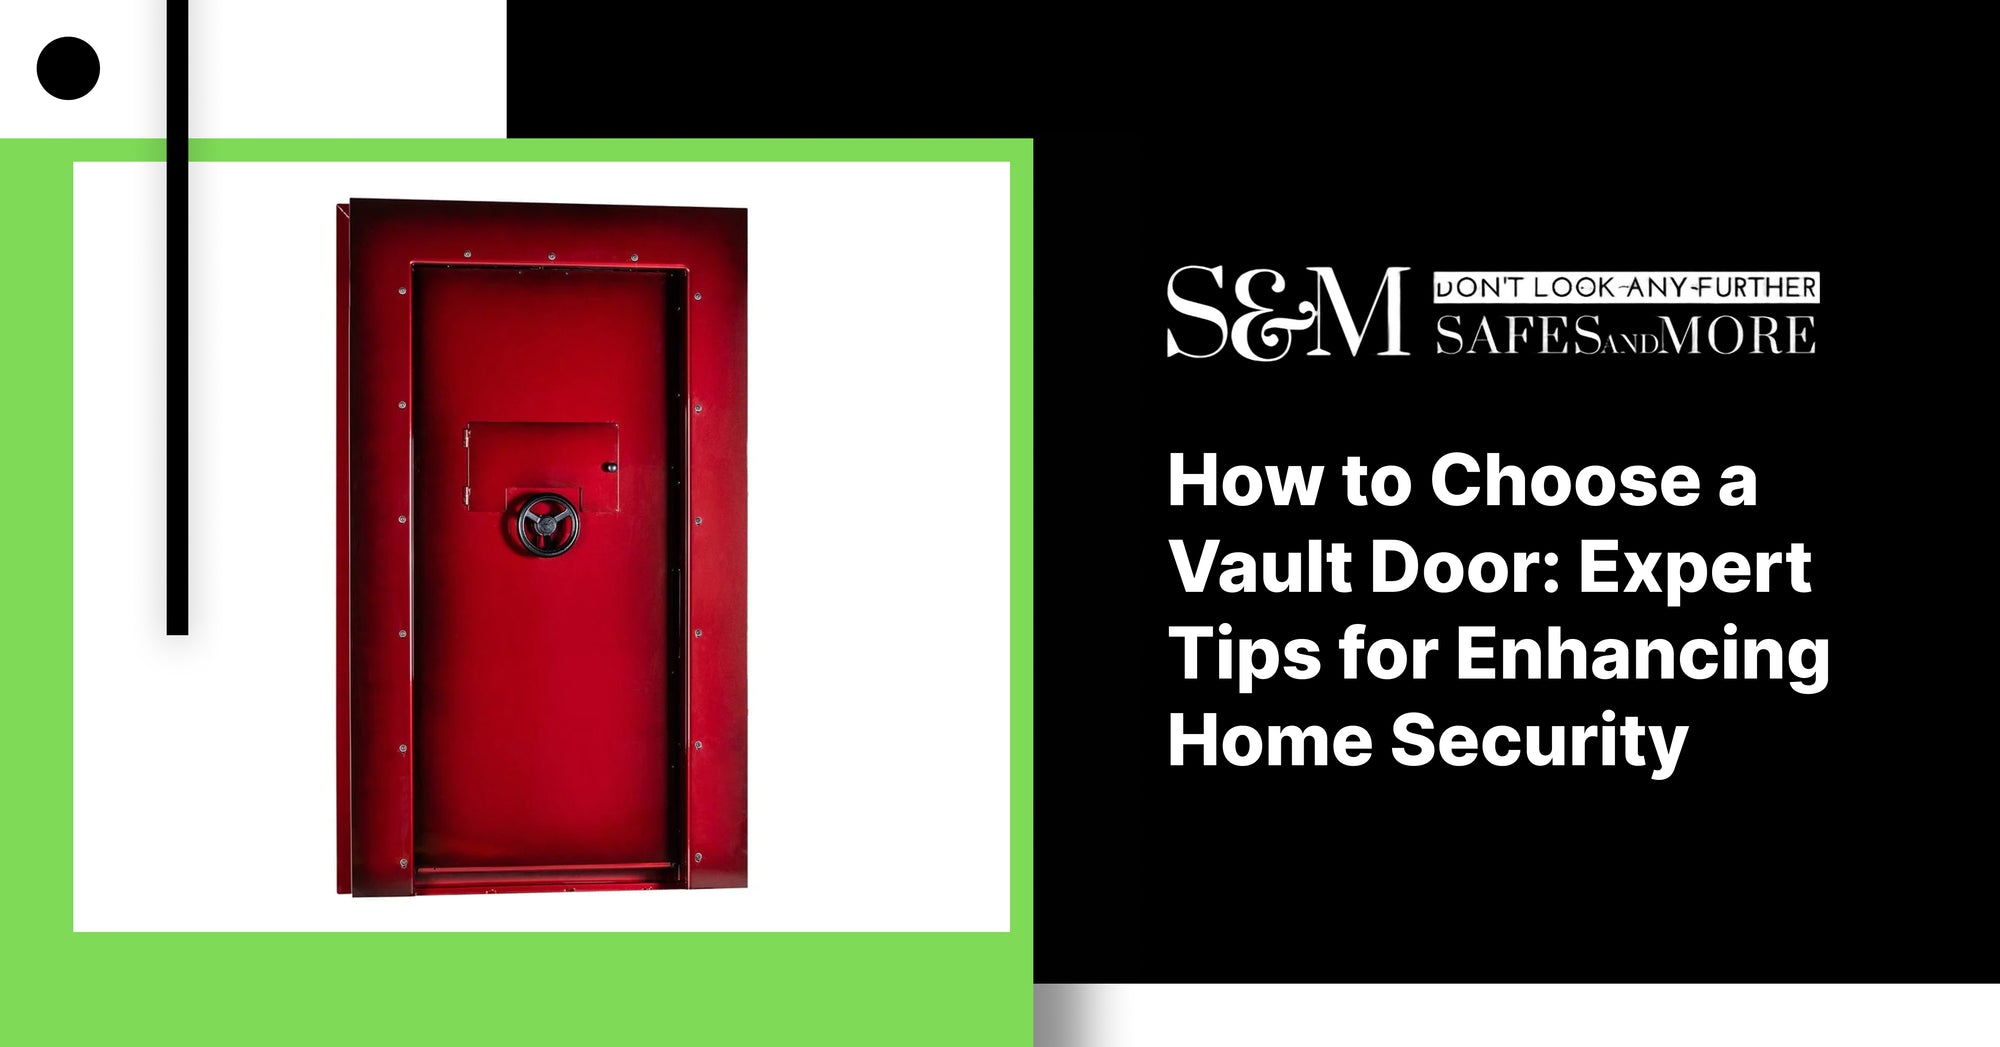 How to Choose a Vault Door: Expert Tips for Enhancing Home Security